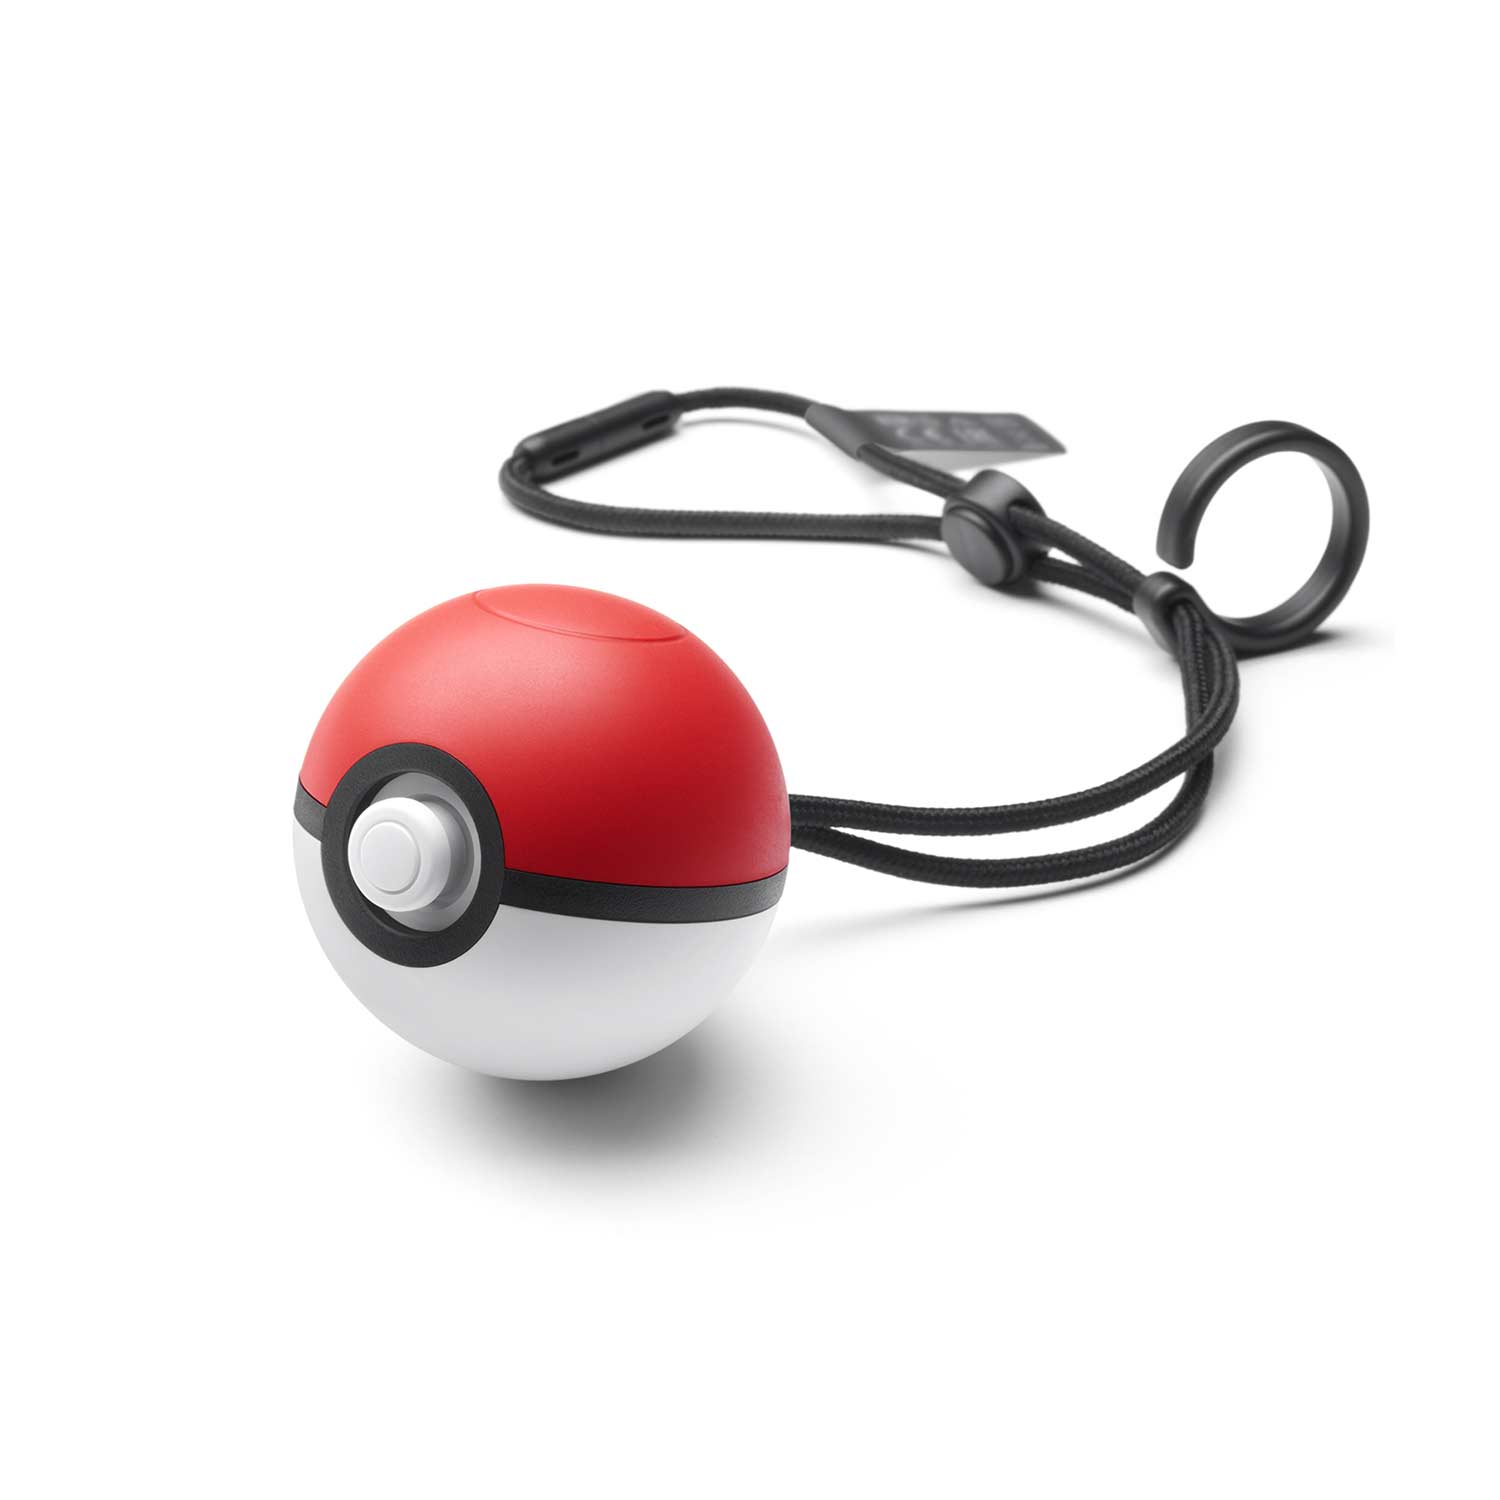 Pokémon Lets Go Eevee Poké Ball Plus Pack For Nintendo Switch